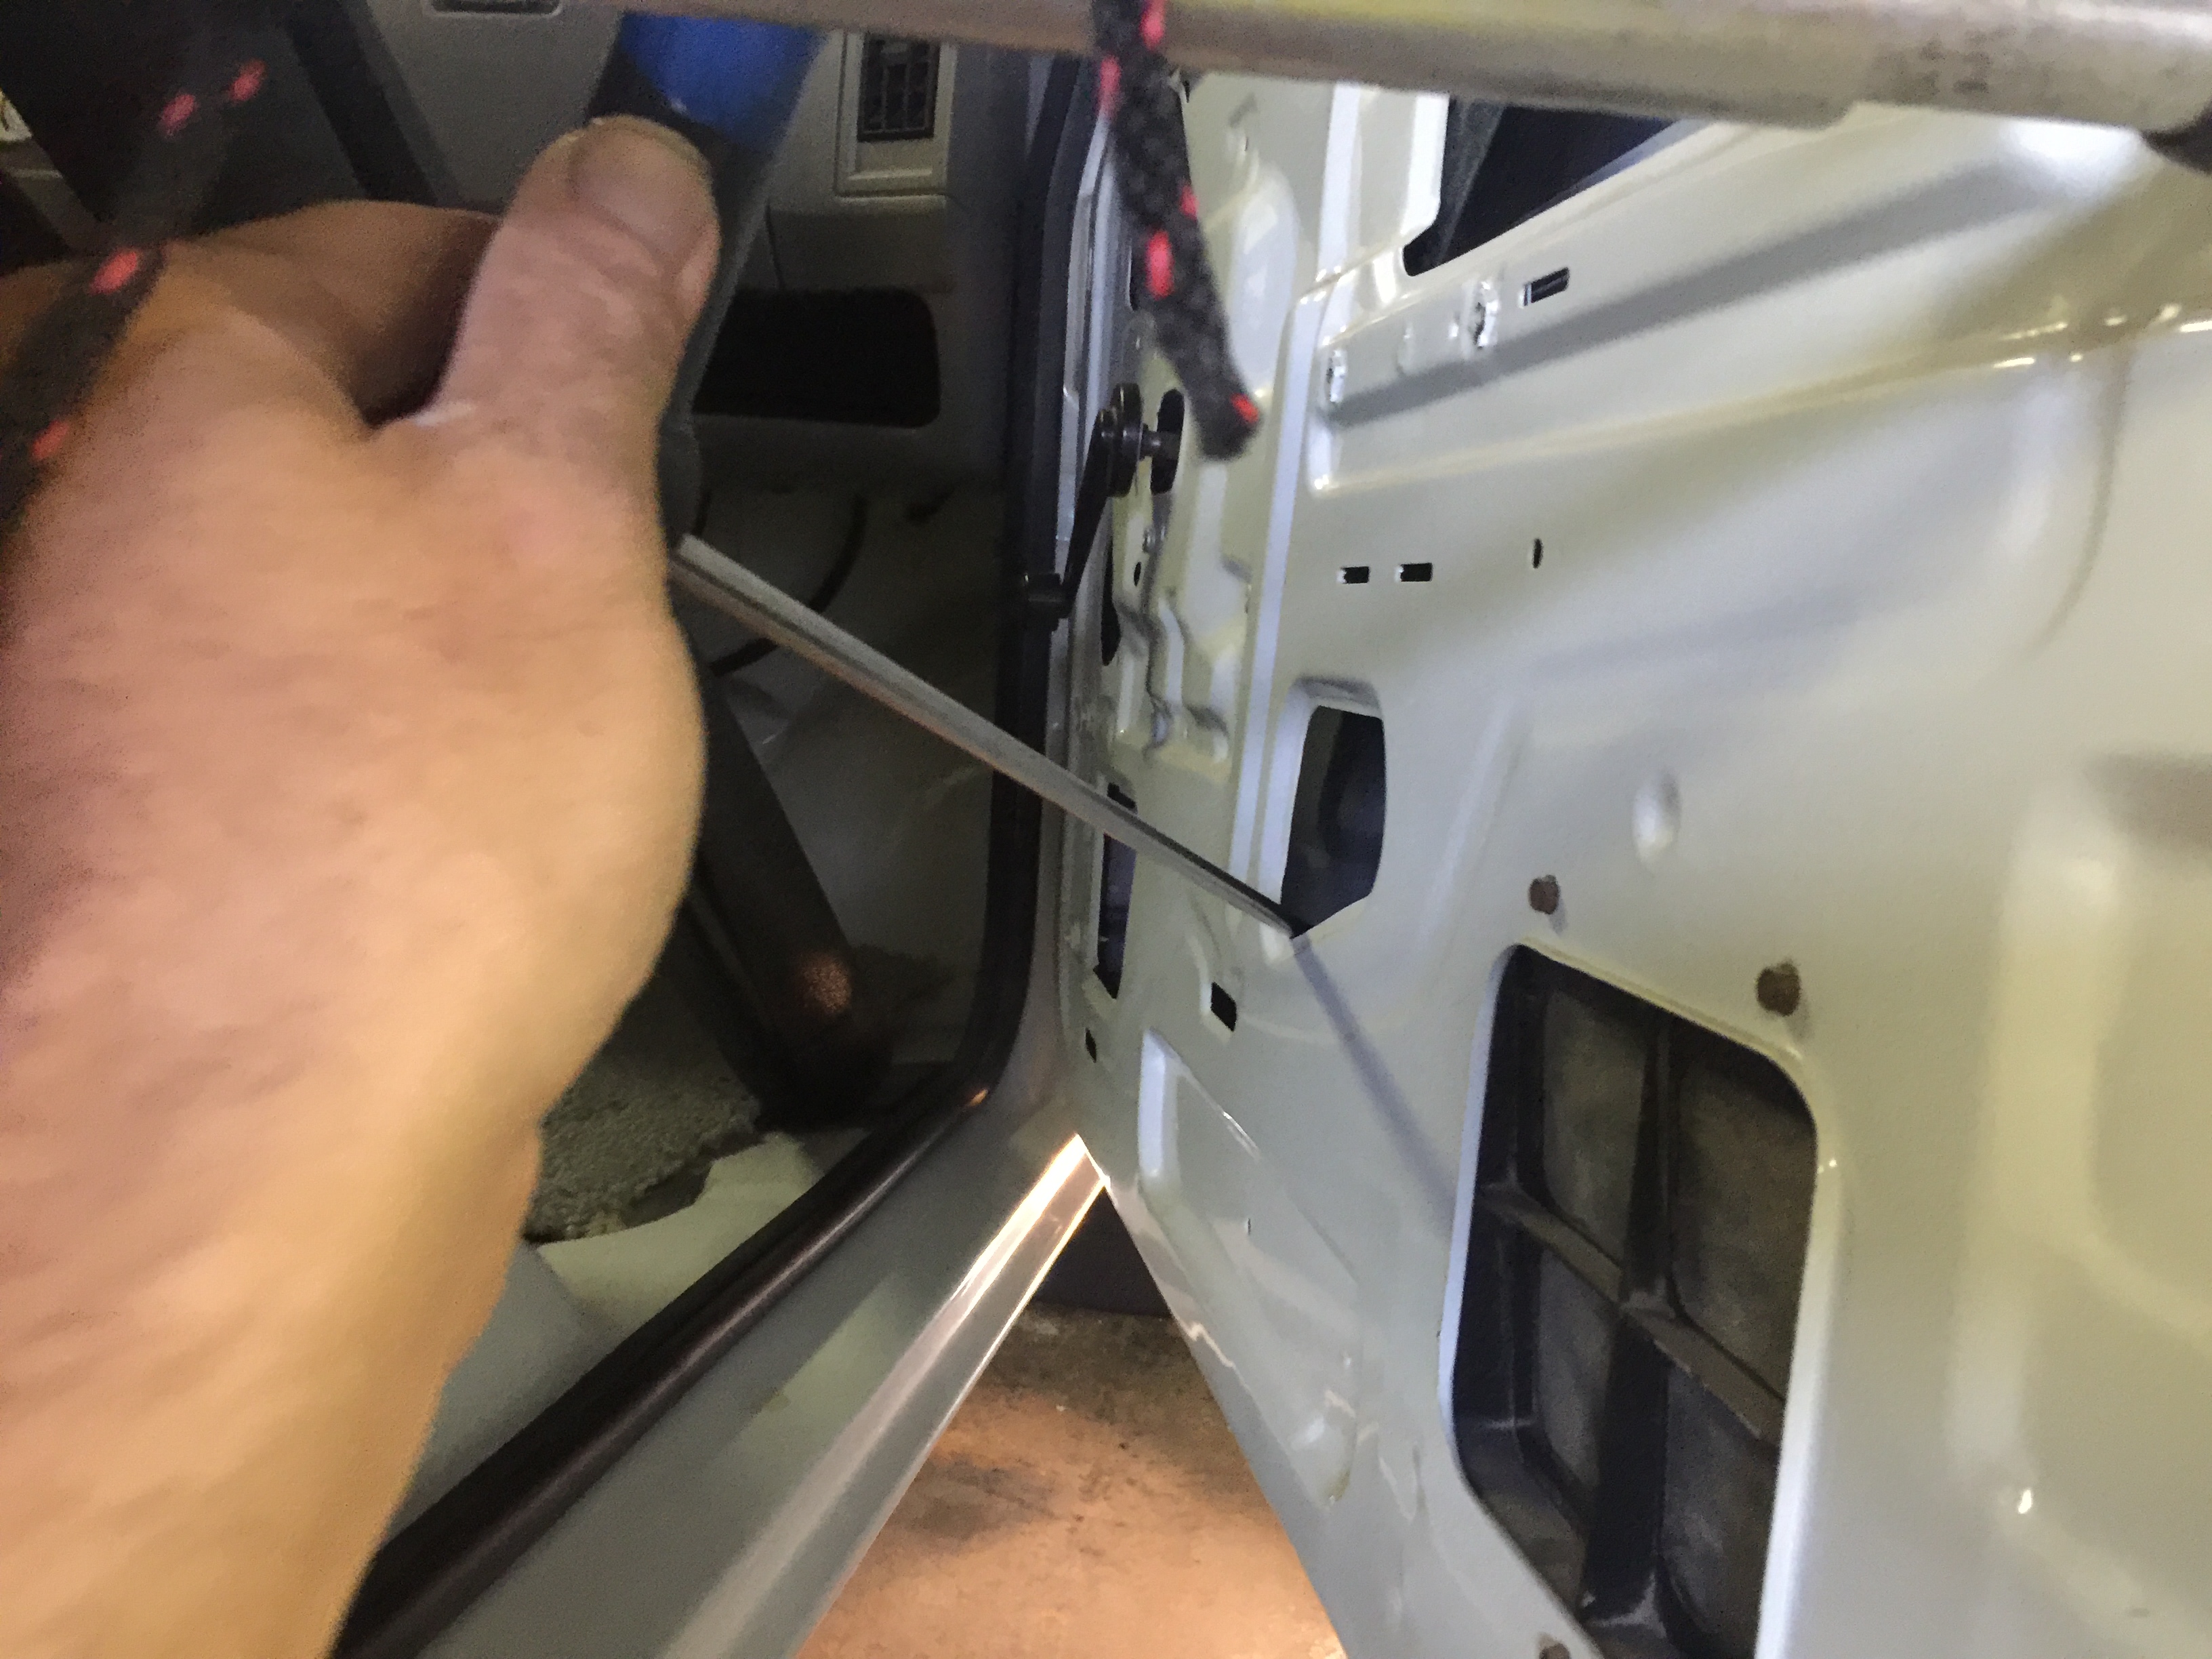 1998 Chevy S-10 Dent Repair, Springfield, IL. https://217dent.com